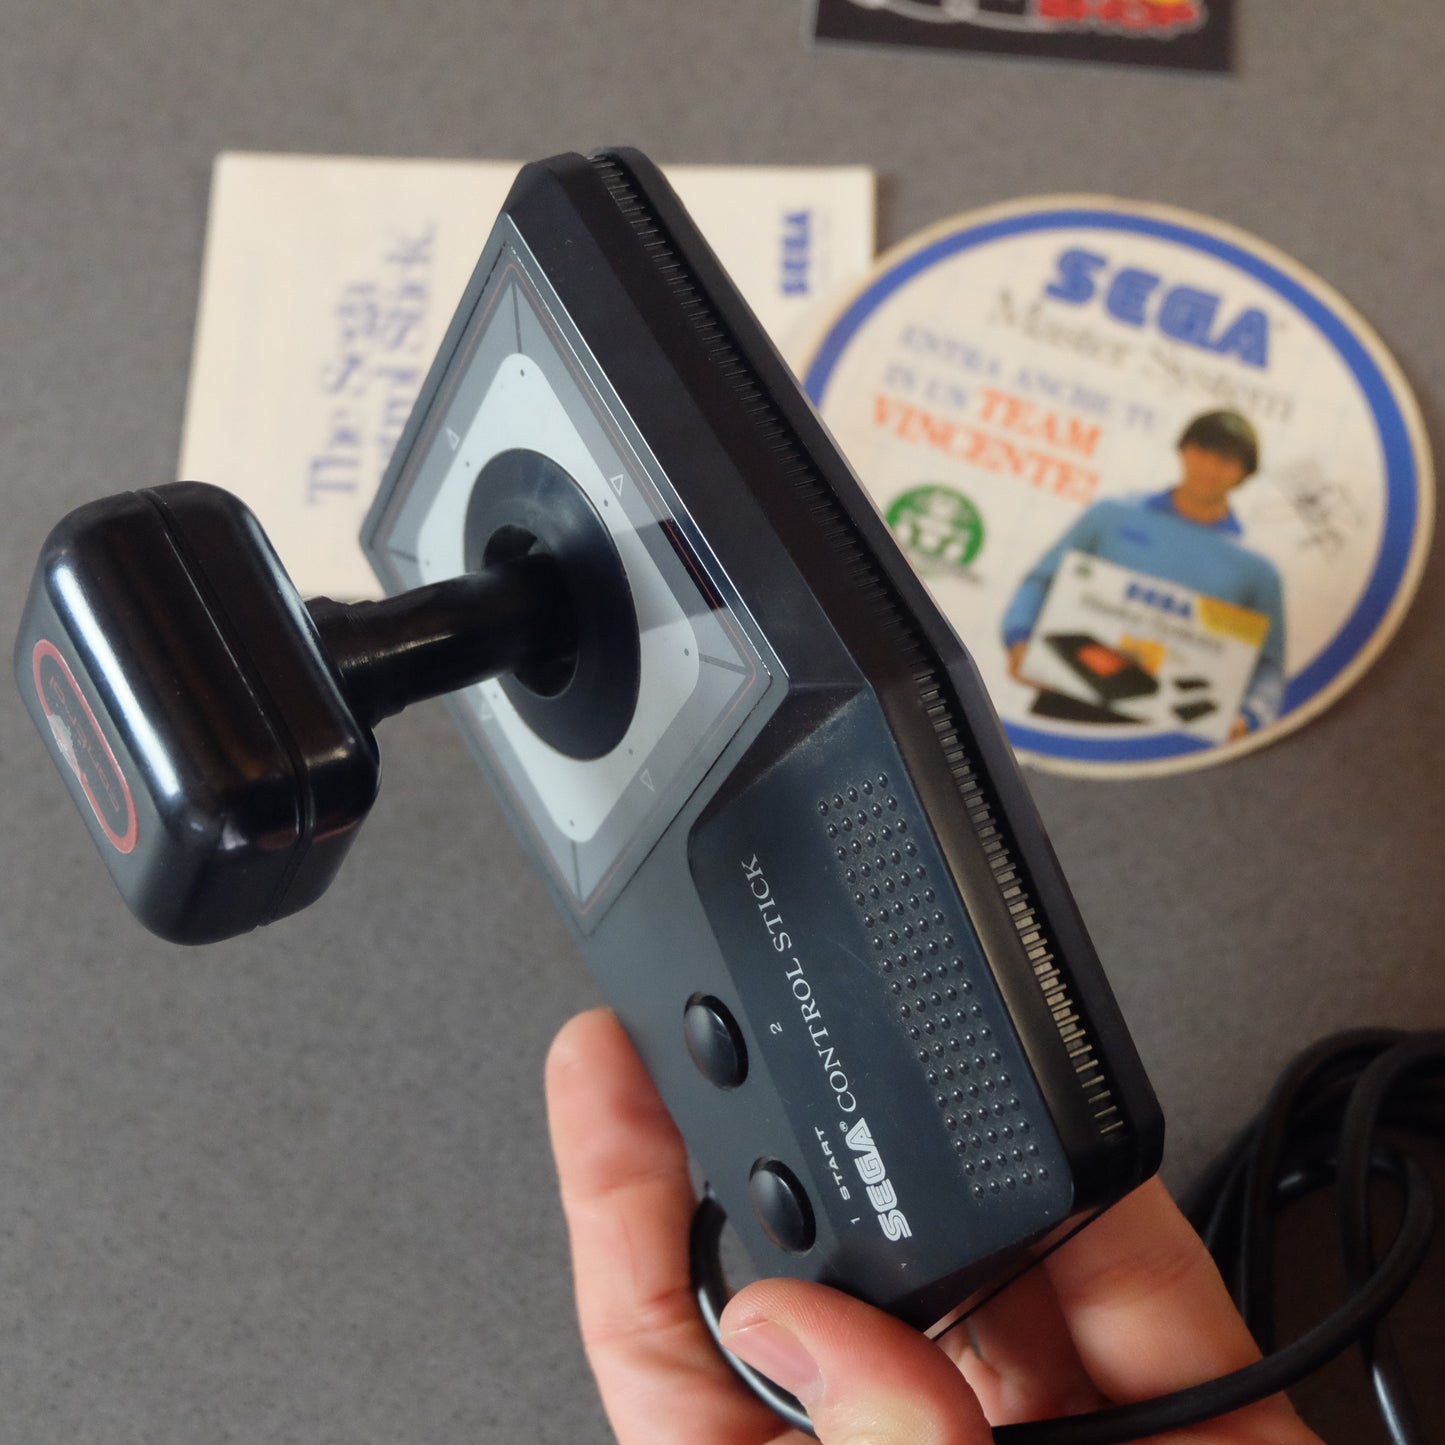 The Sega Control Stick